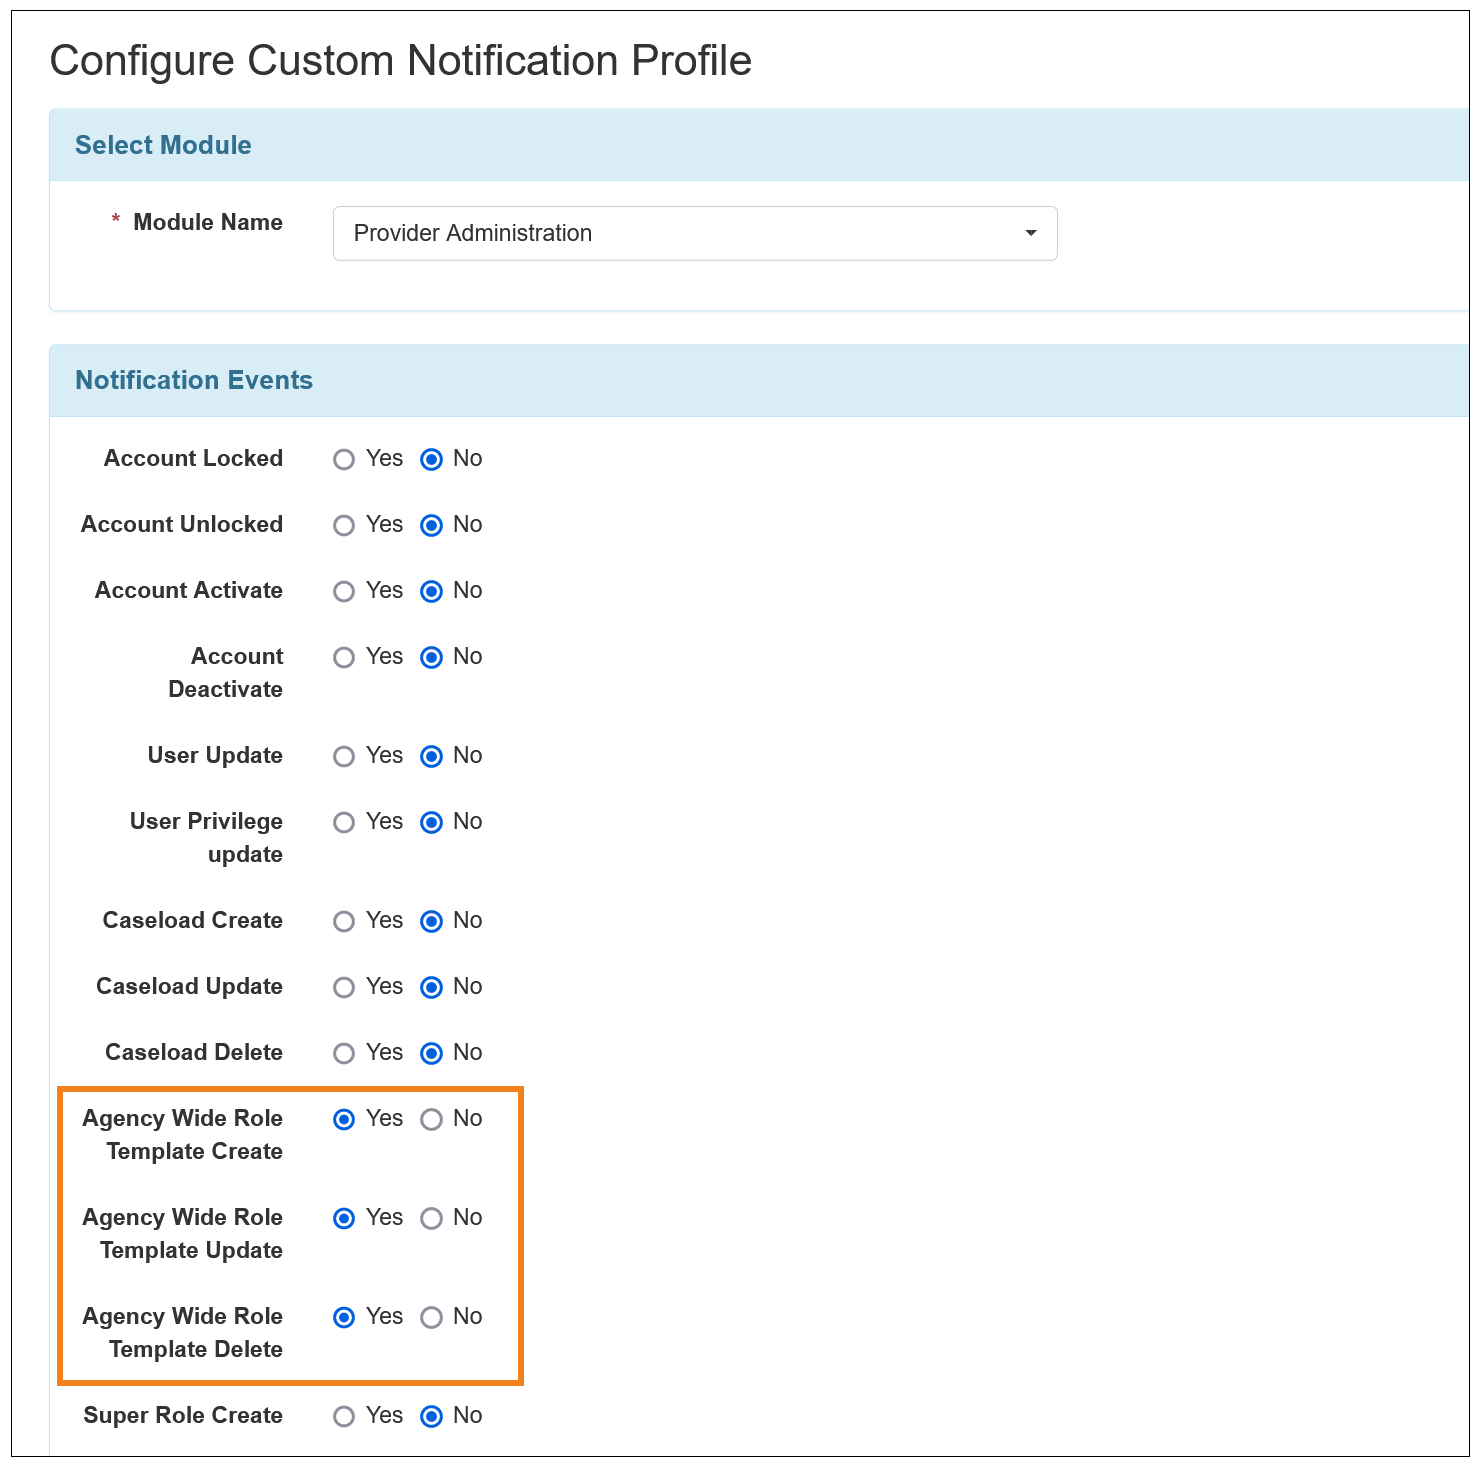 Screenshot showing the Configure Custom Notification Profile page